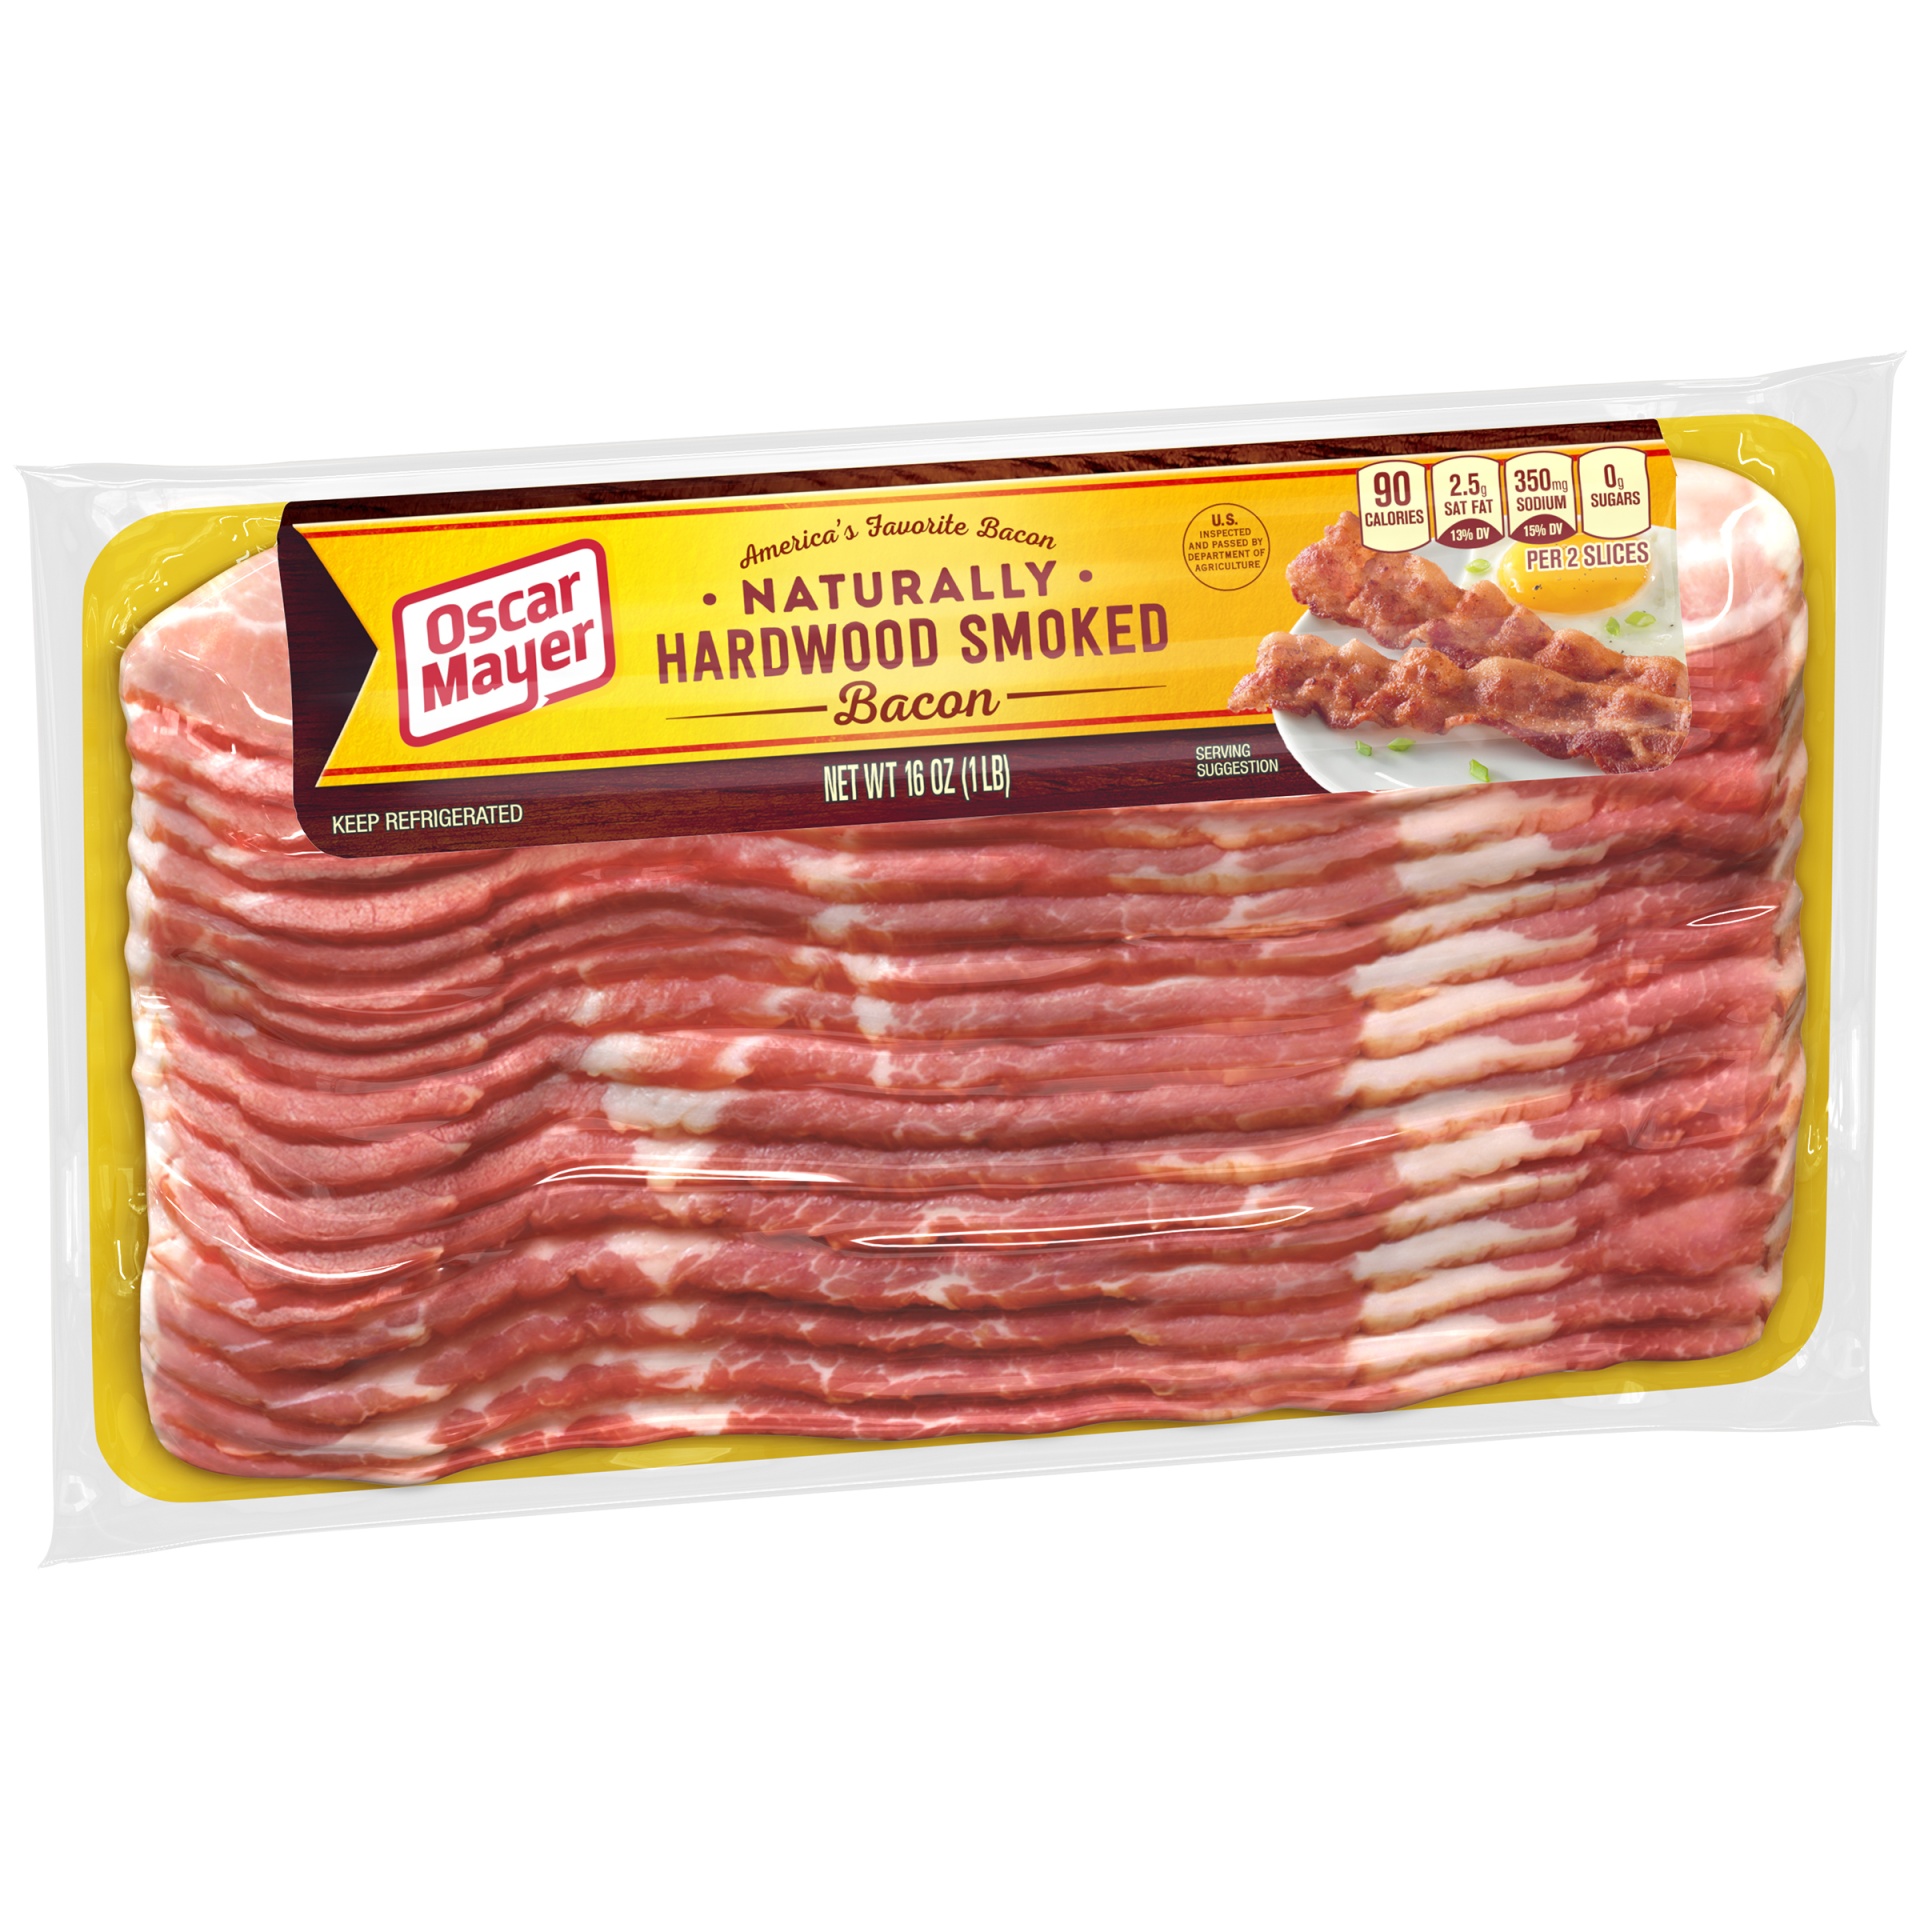 slide 8 of 12, Oscar Mayer Naturally Hardwood Smoked Bacon Pack, 17-19 slices, 16 oz